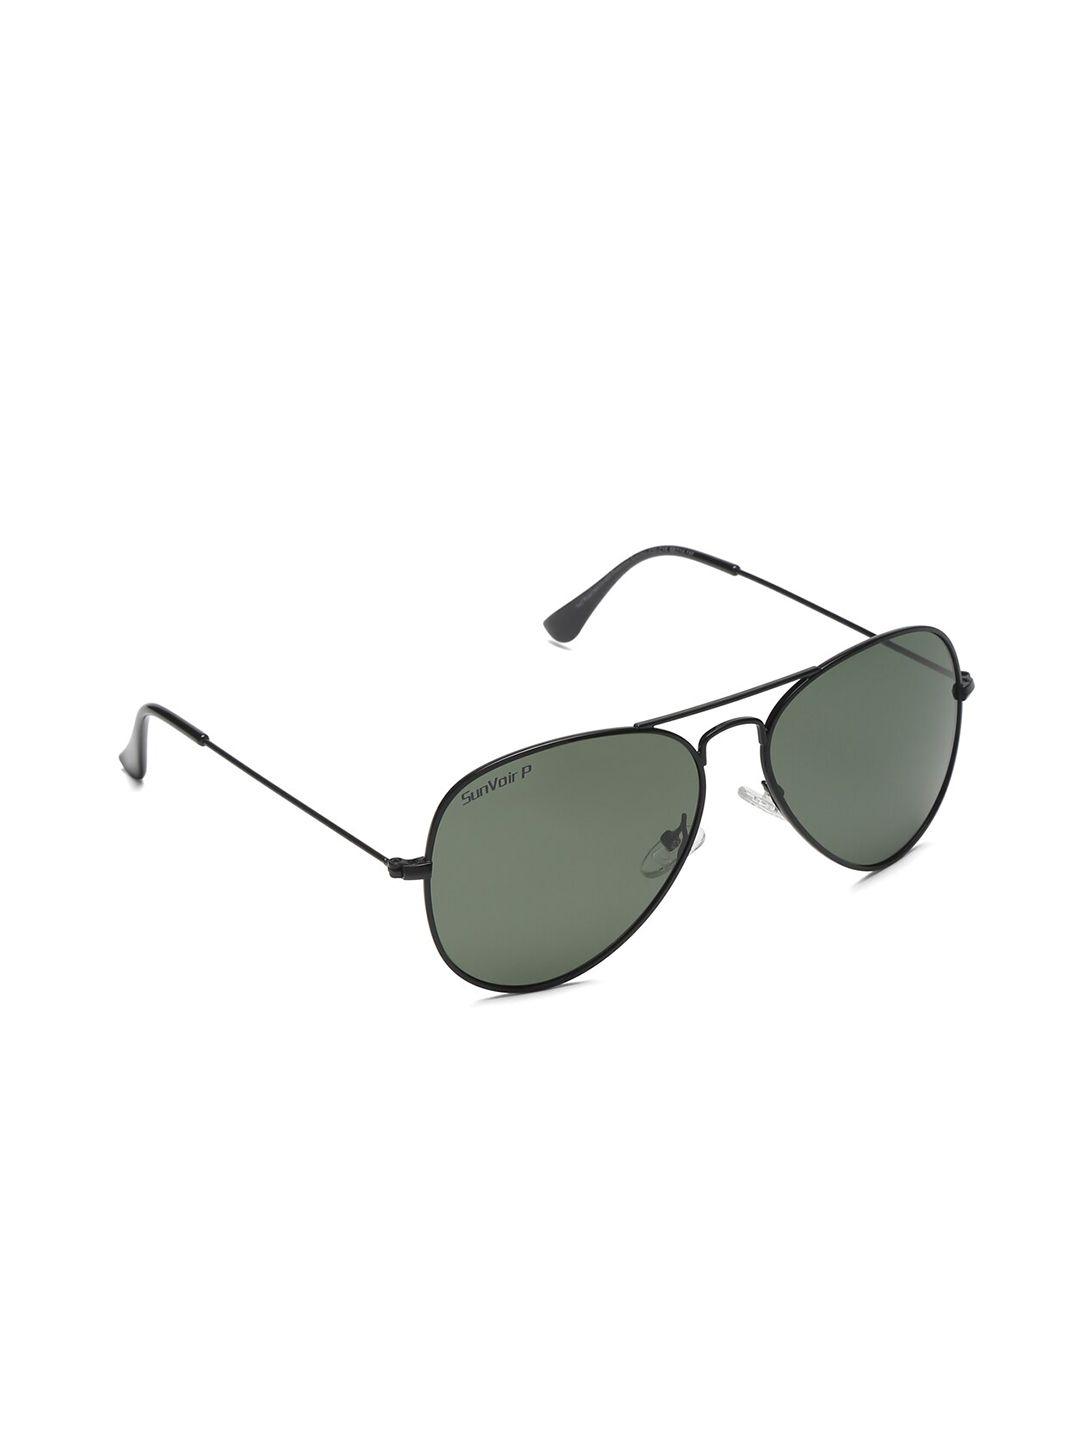 sunvoir unisex green lens & black aviator sunglasses with polarised lens